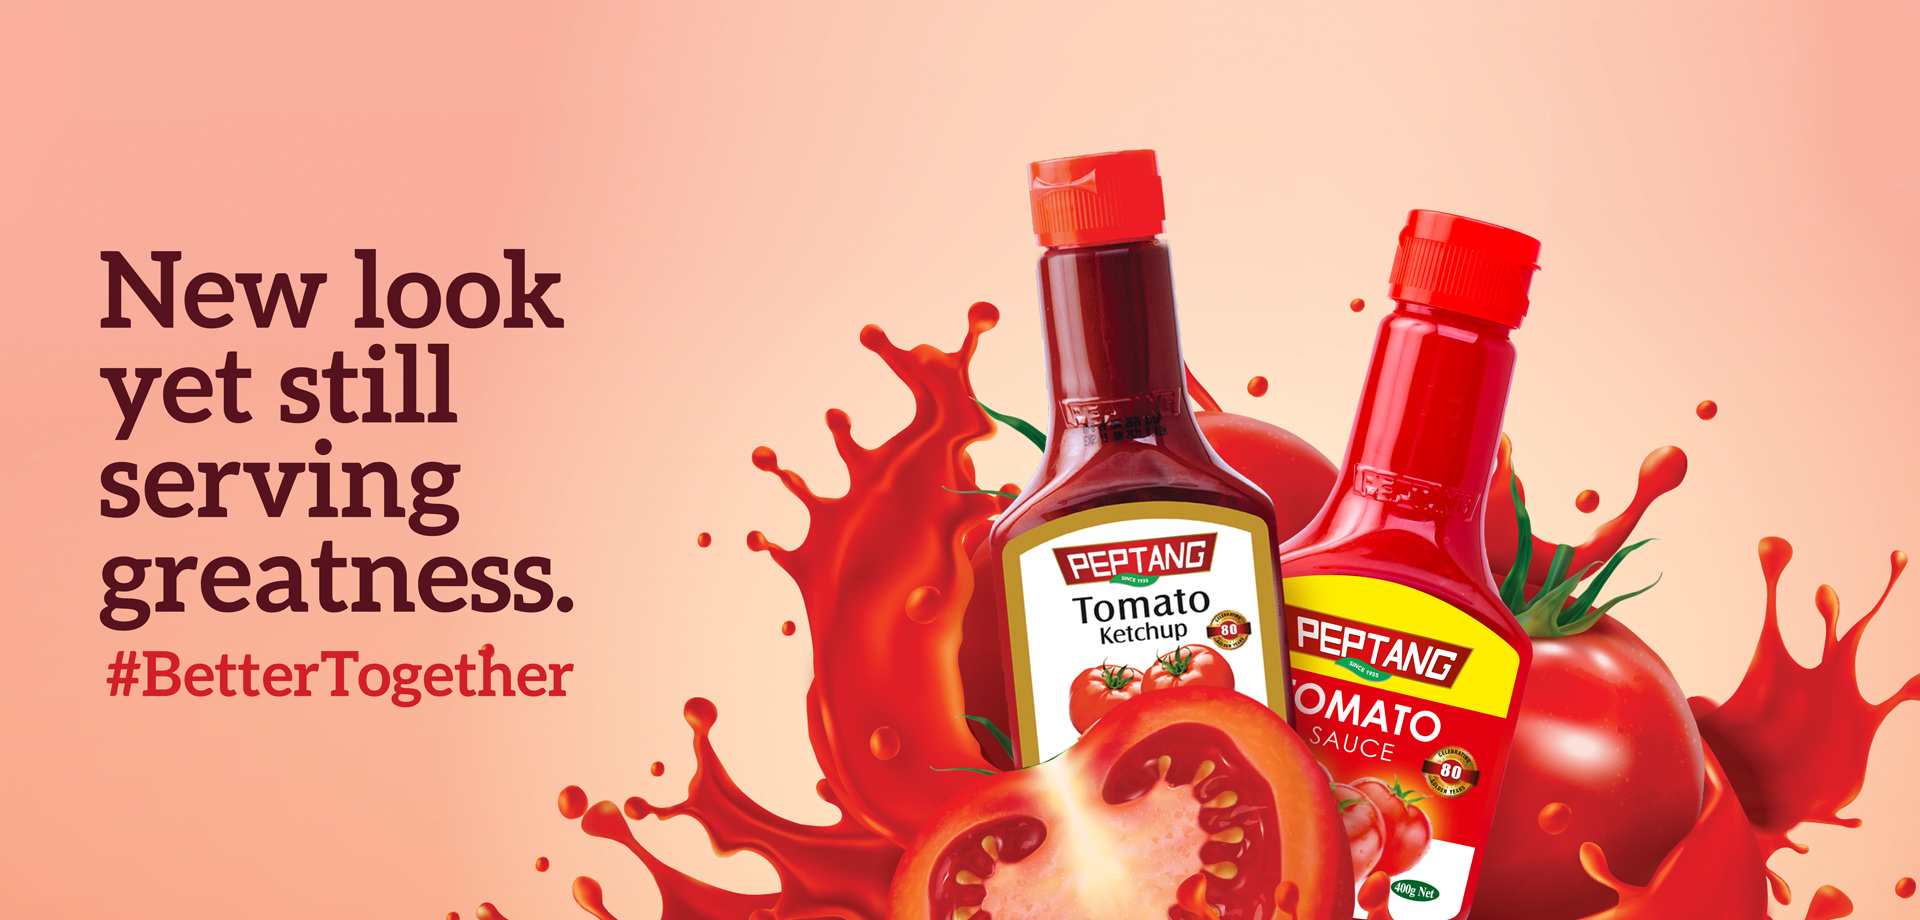 Tomato-ketchup